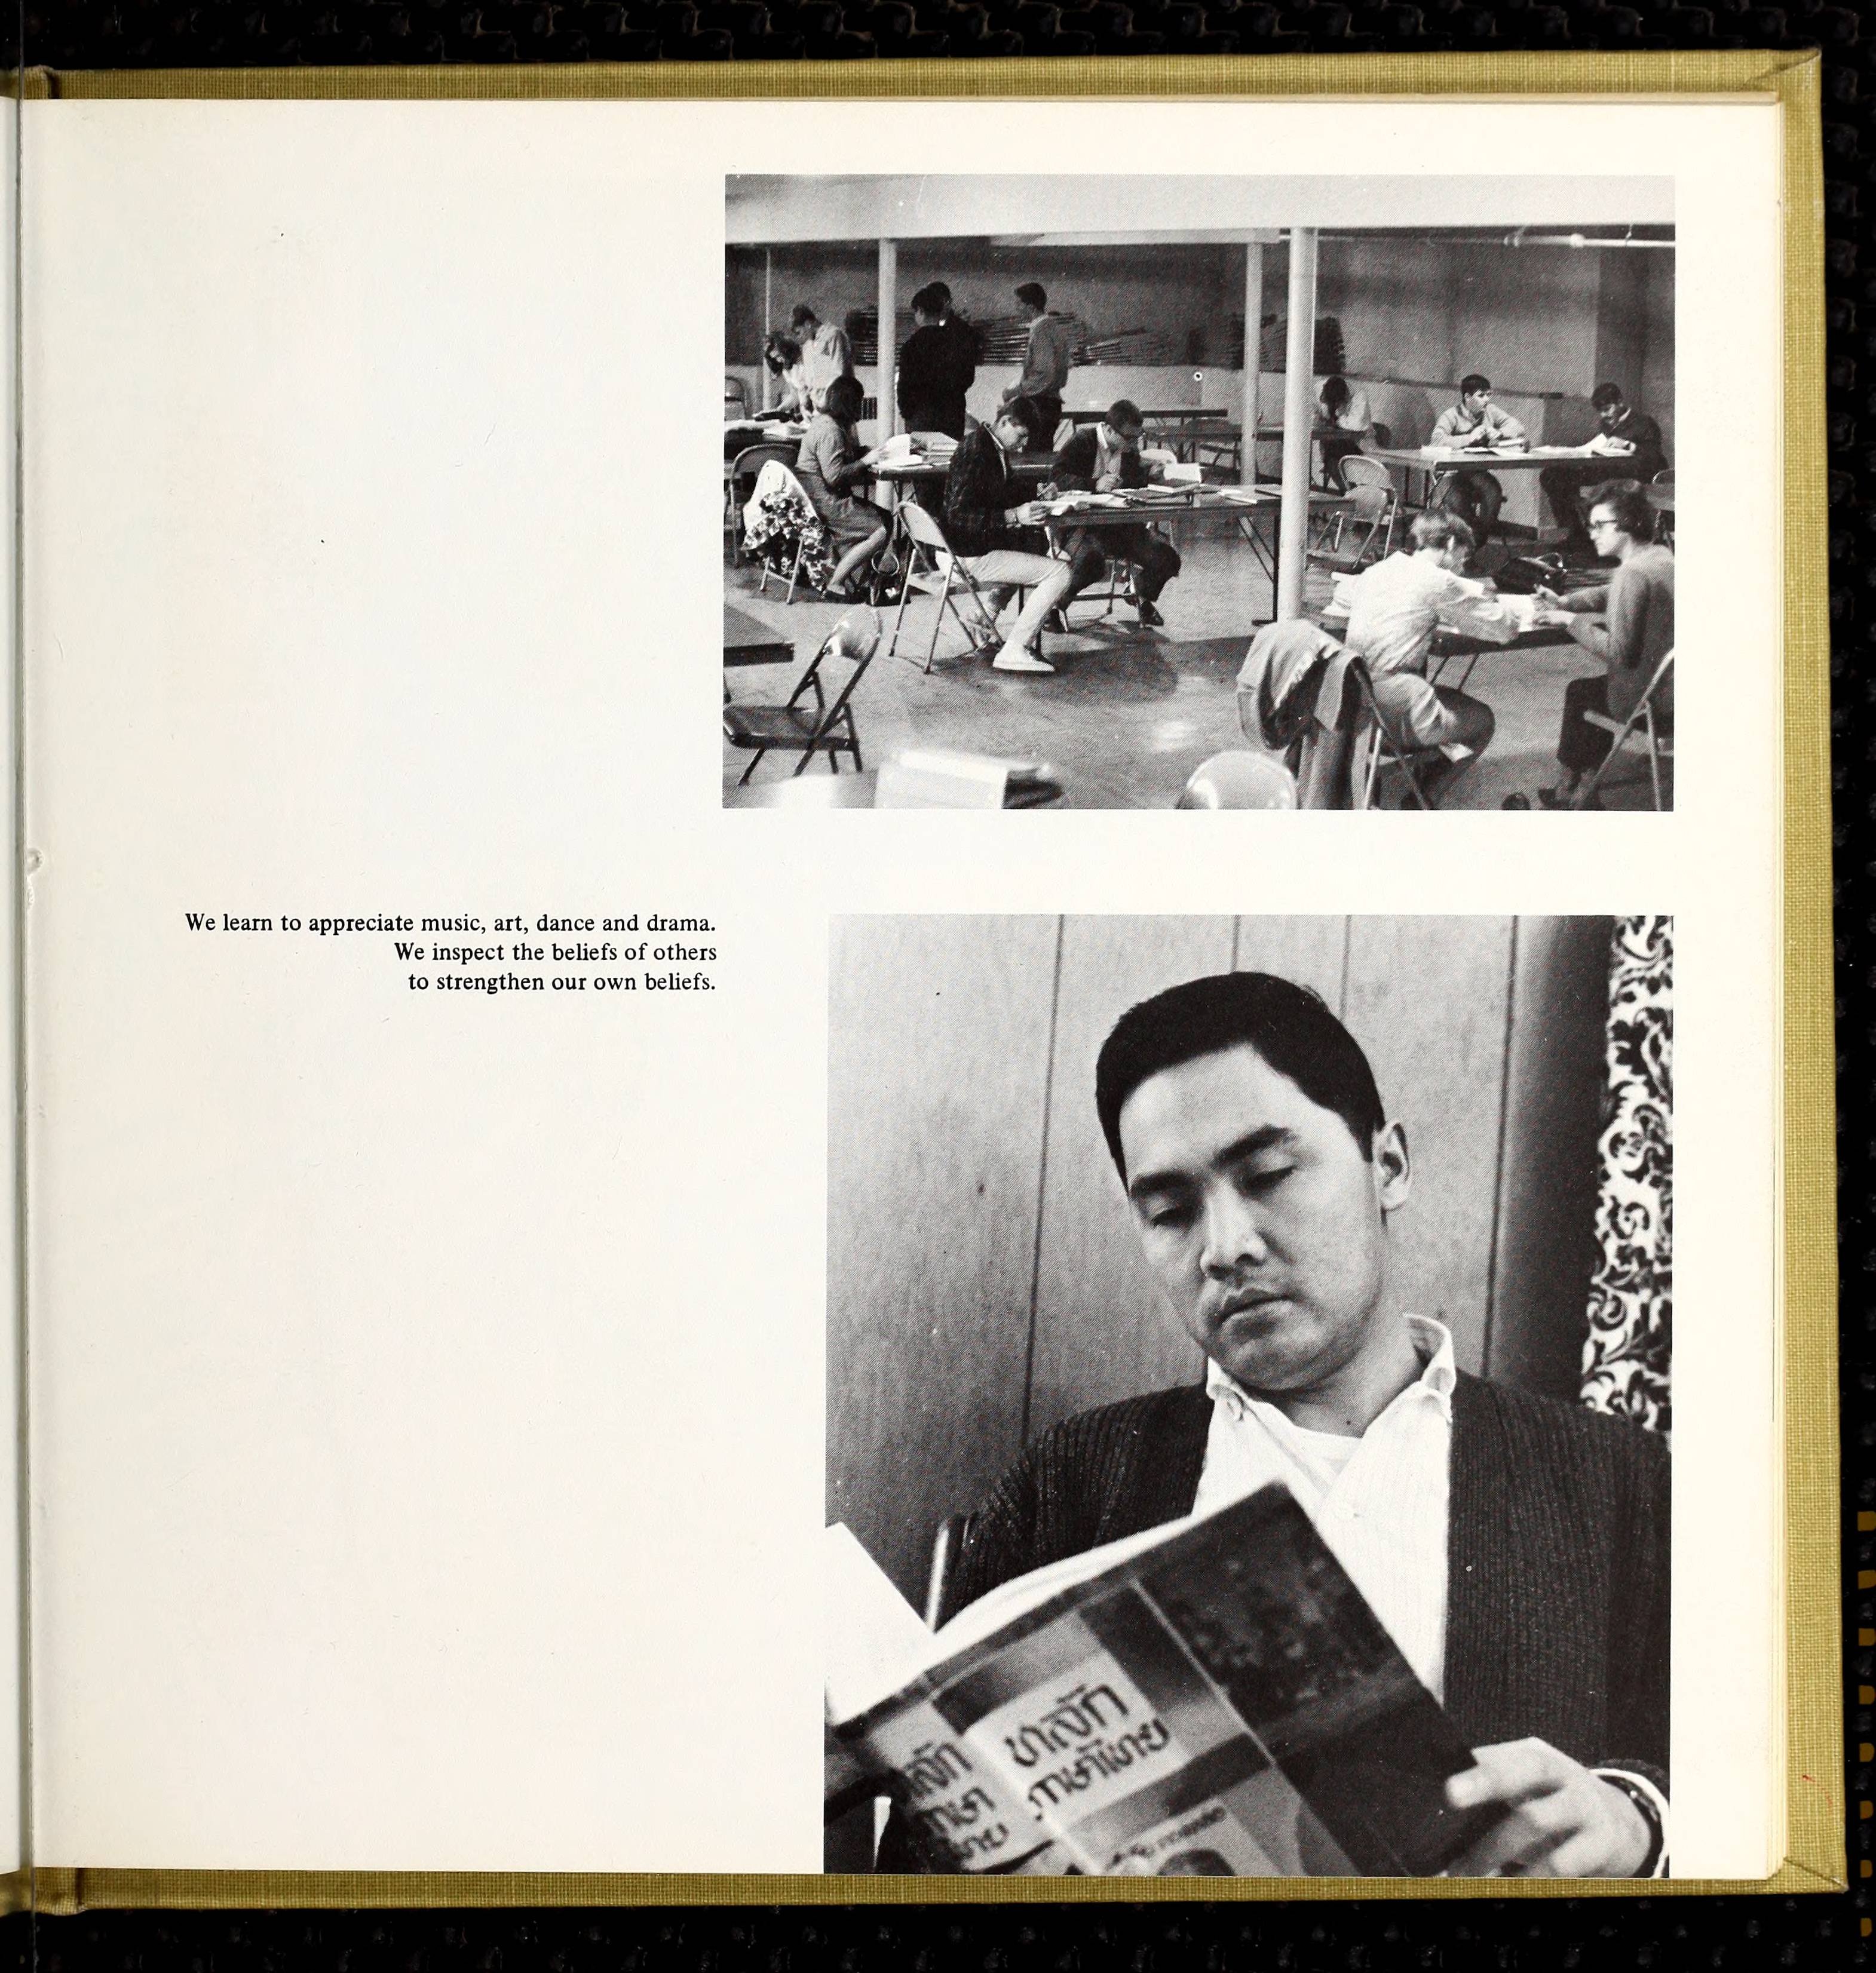 wilkes-community-college-yearbook-1967-1968